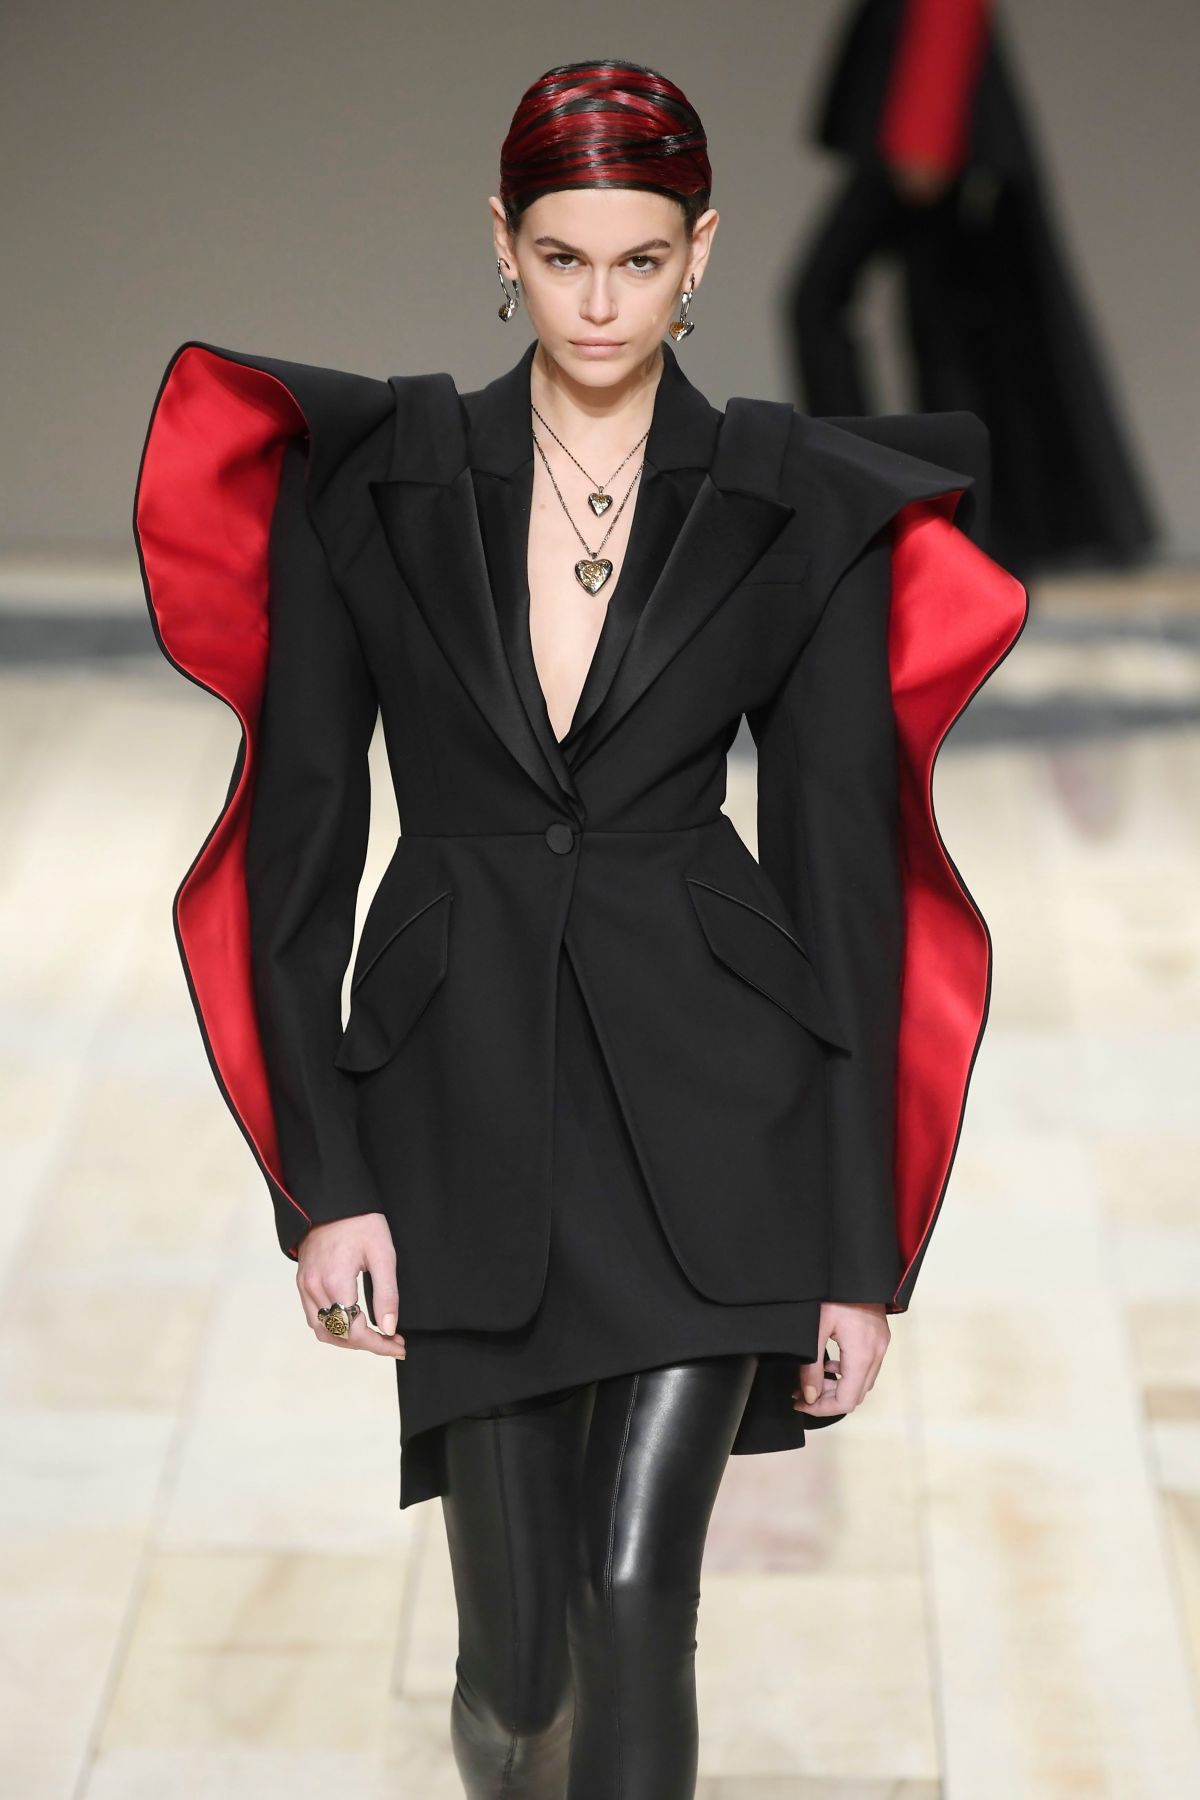 KAIA GERBER at Alexander McQueen Runway Show at Paris Fashion Week 03 ...